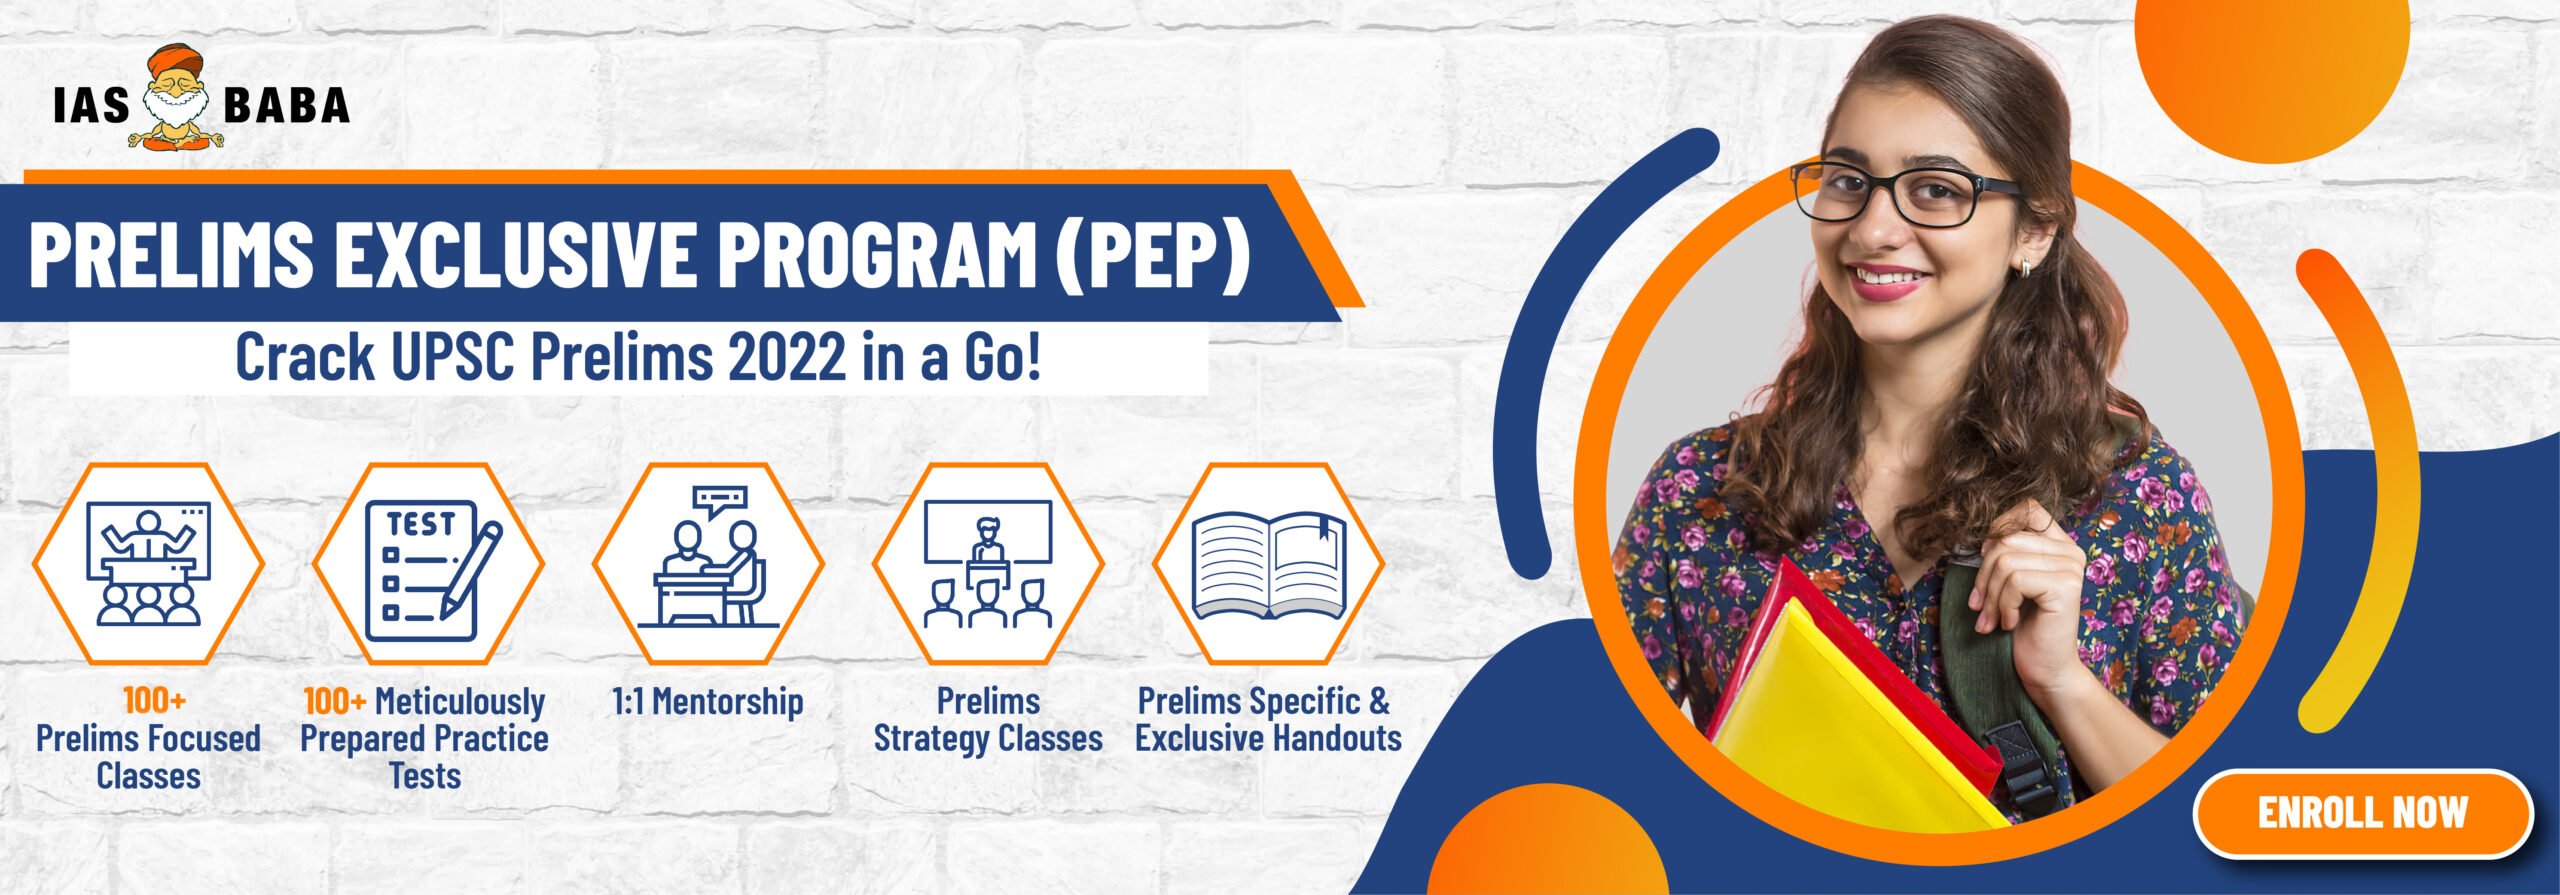 [NEW BATCH – ADMISSIONS OPEN] Prelims Exclusive Programme (PEP) – Most Comprehensive Mentorship-Based Program for UPSC PRELIMS 2022!